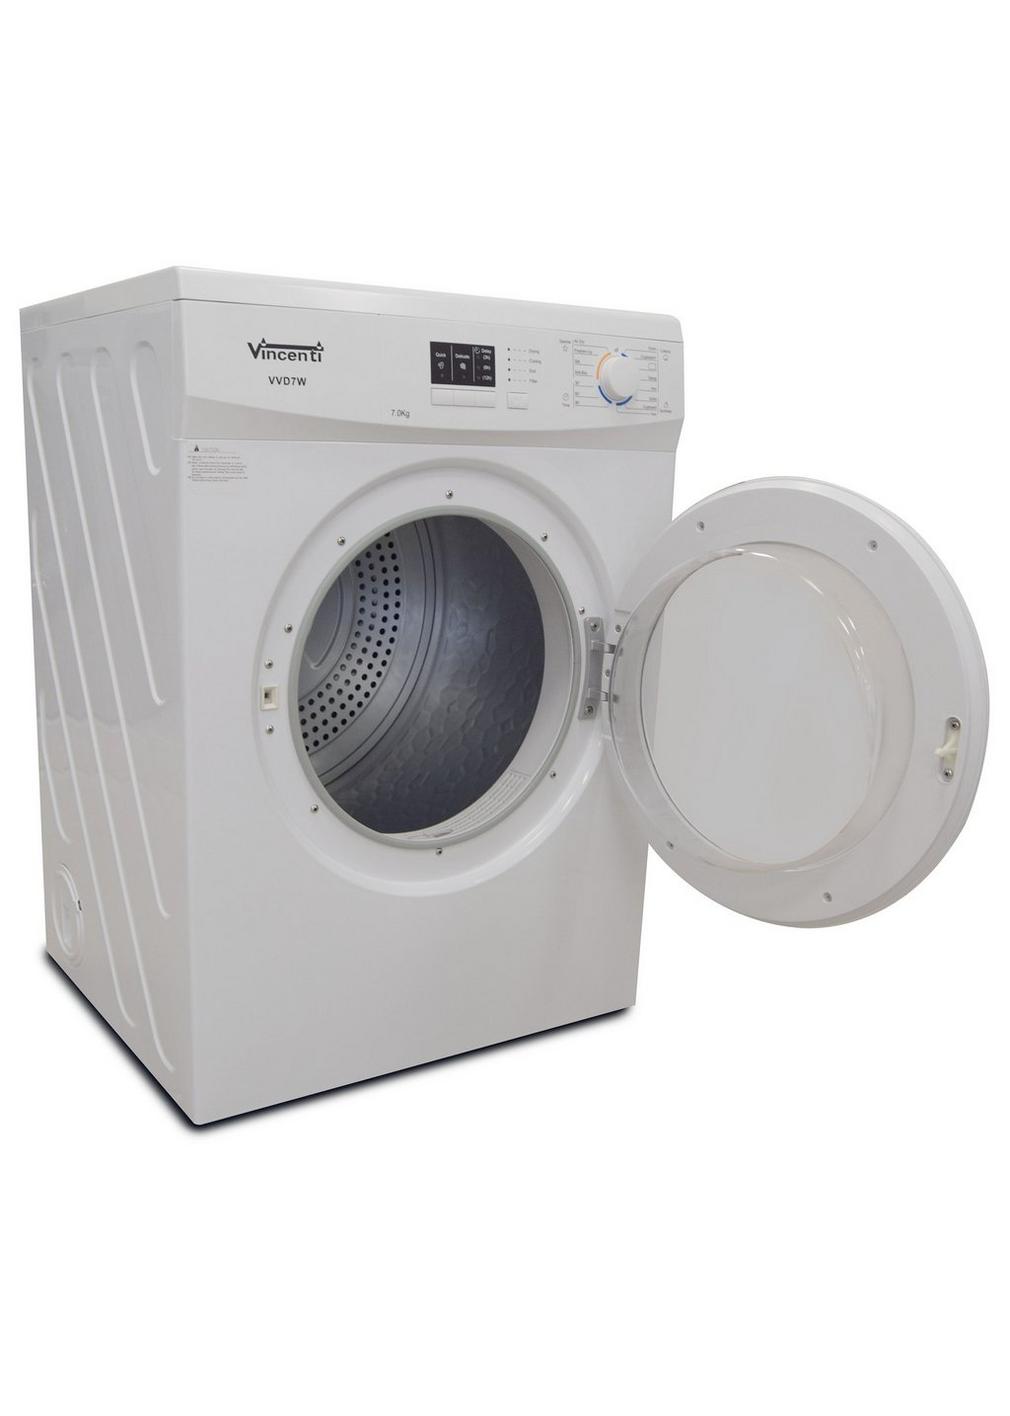 Vincenti 7kg Vented dryer White - VVD7W | Home Appliance & Electronics | Halabh.com